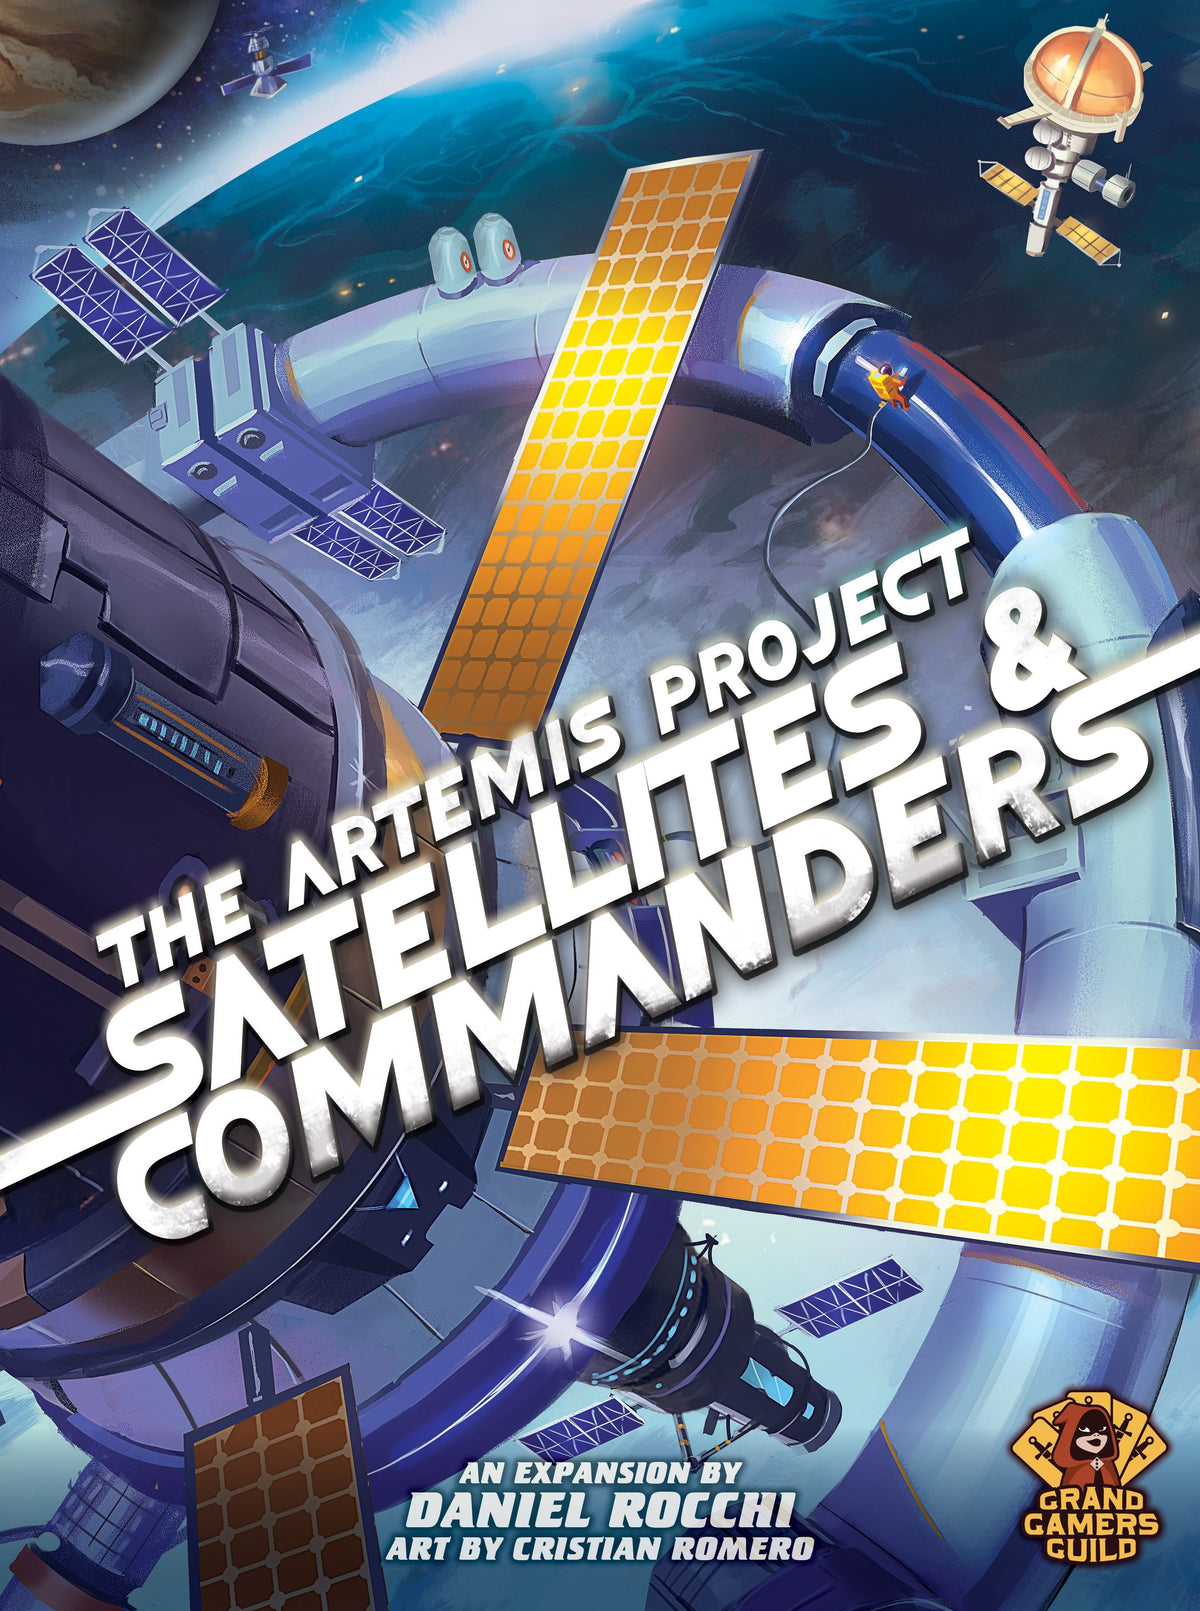 The Artemis Project - Satellites &amp; Commanders Expansion (Kickstarter Edition)